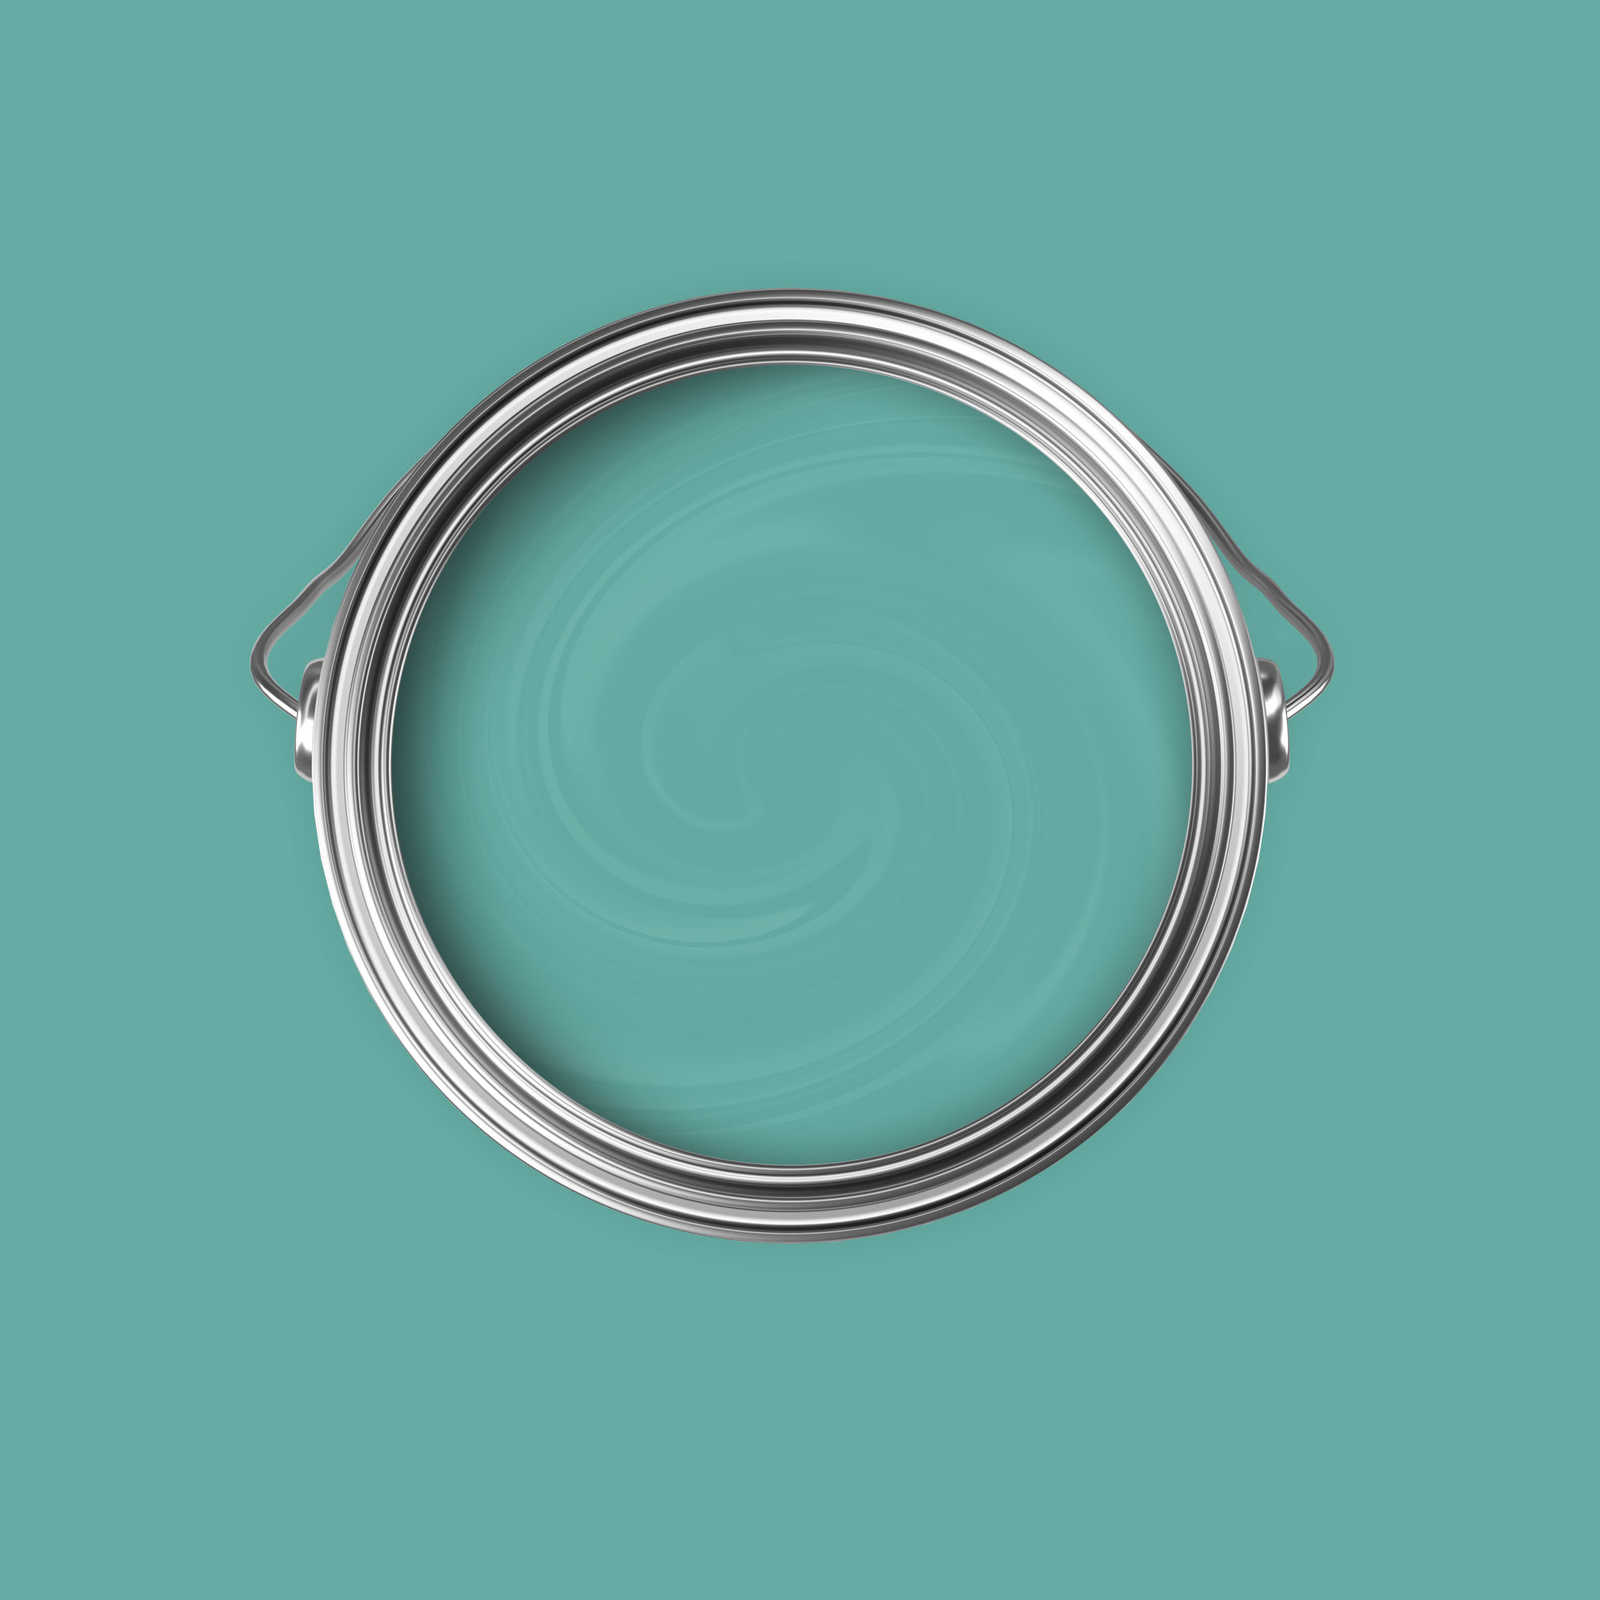             Premium Wall Paint Radiant Mint »Expressive Emerald« NW407 – 5 litre
        